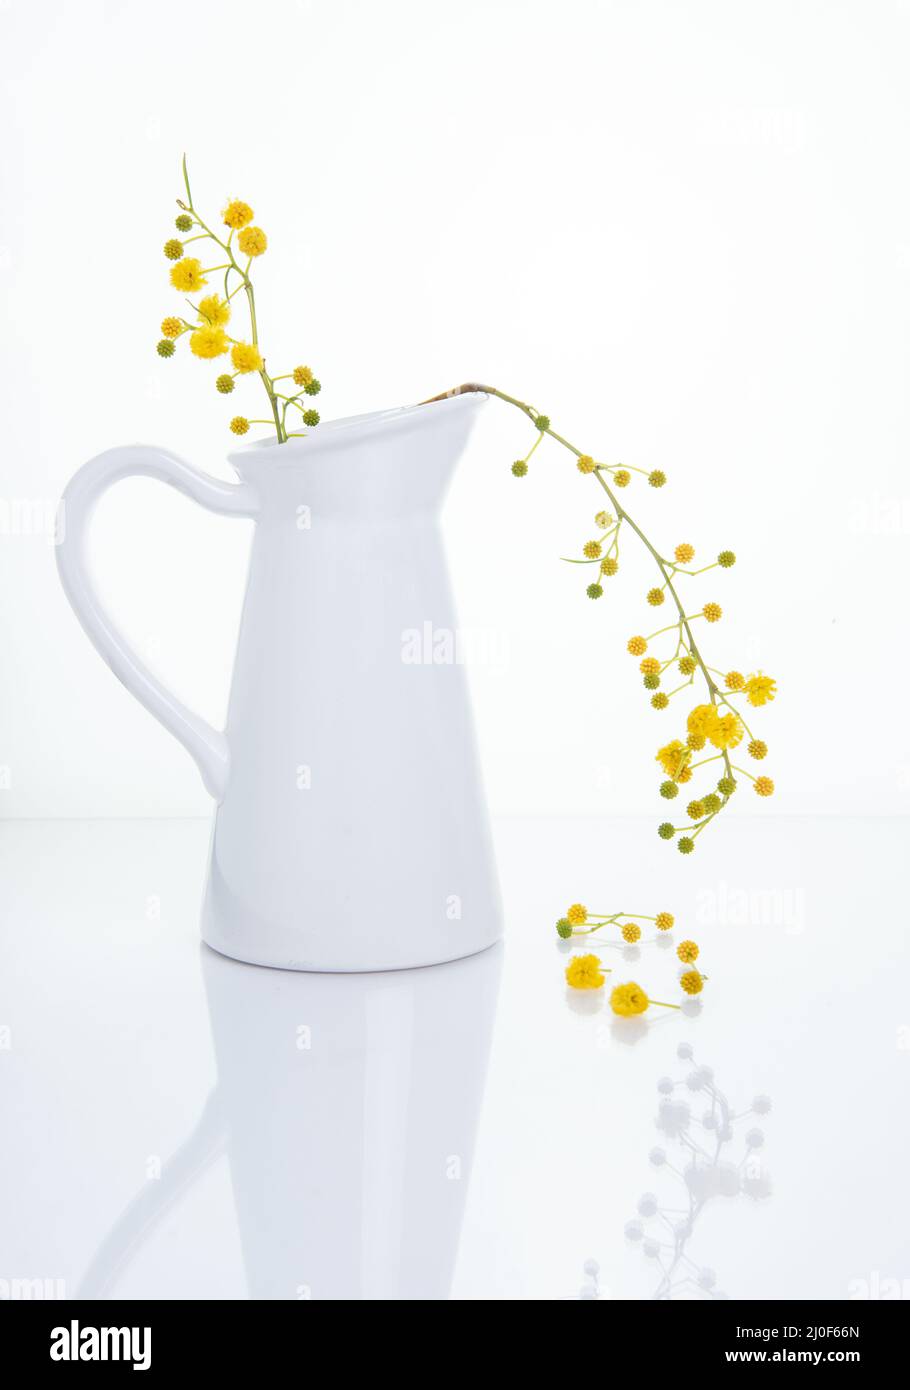 Yellow beautiful flowers on a white vase. High Key still-life photography Stock Photo